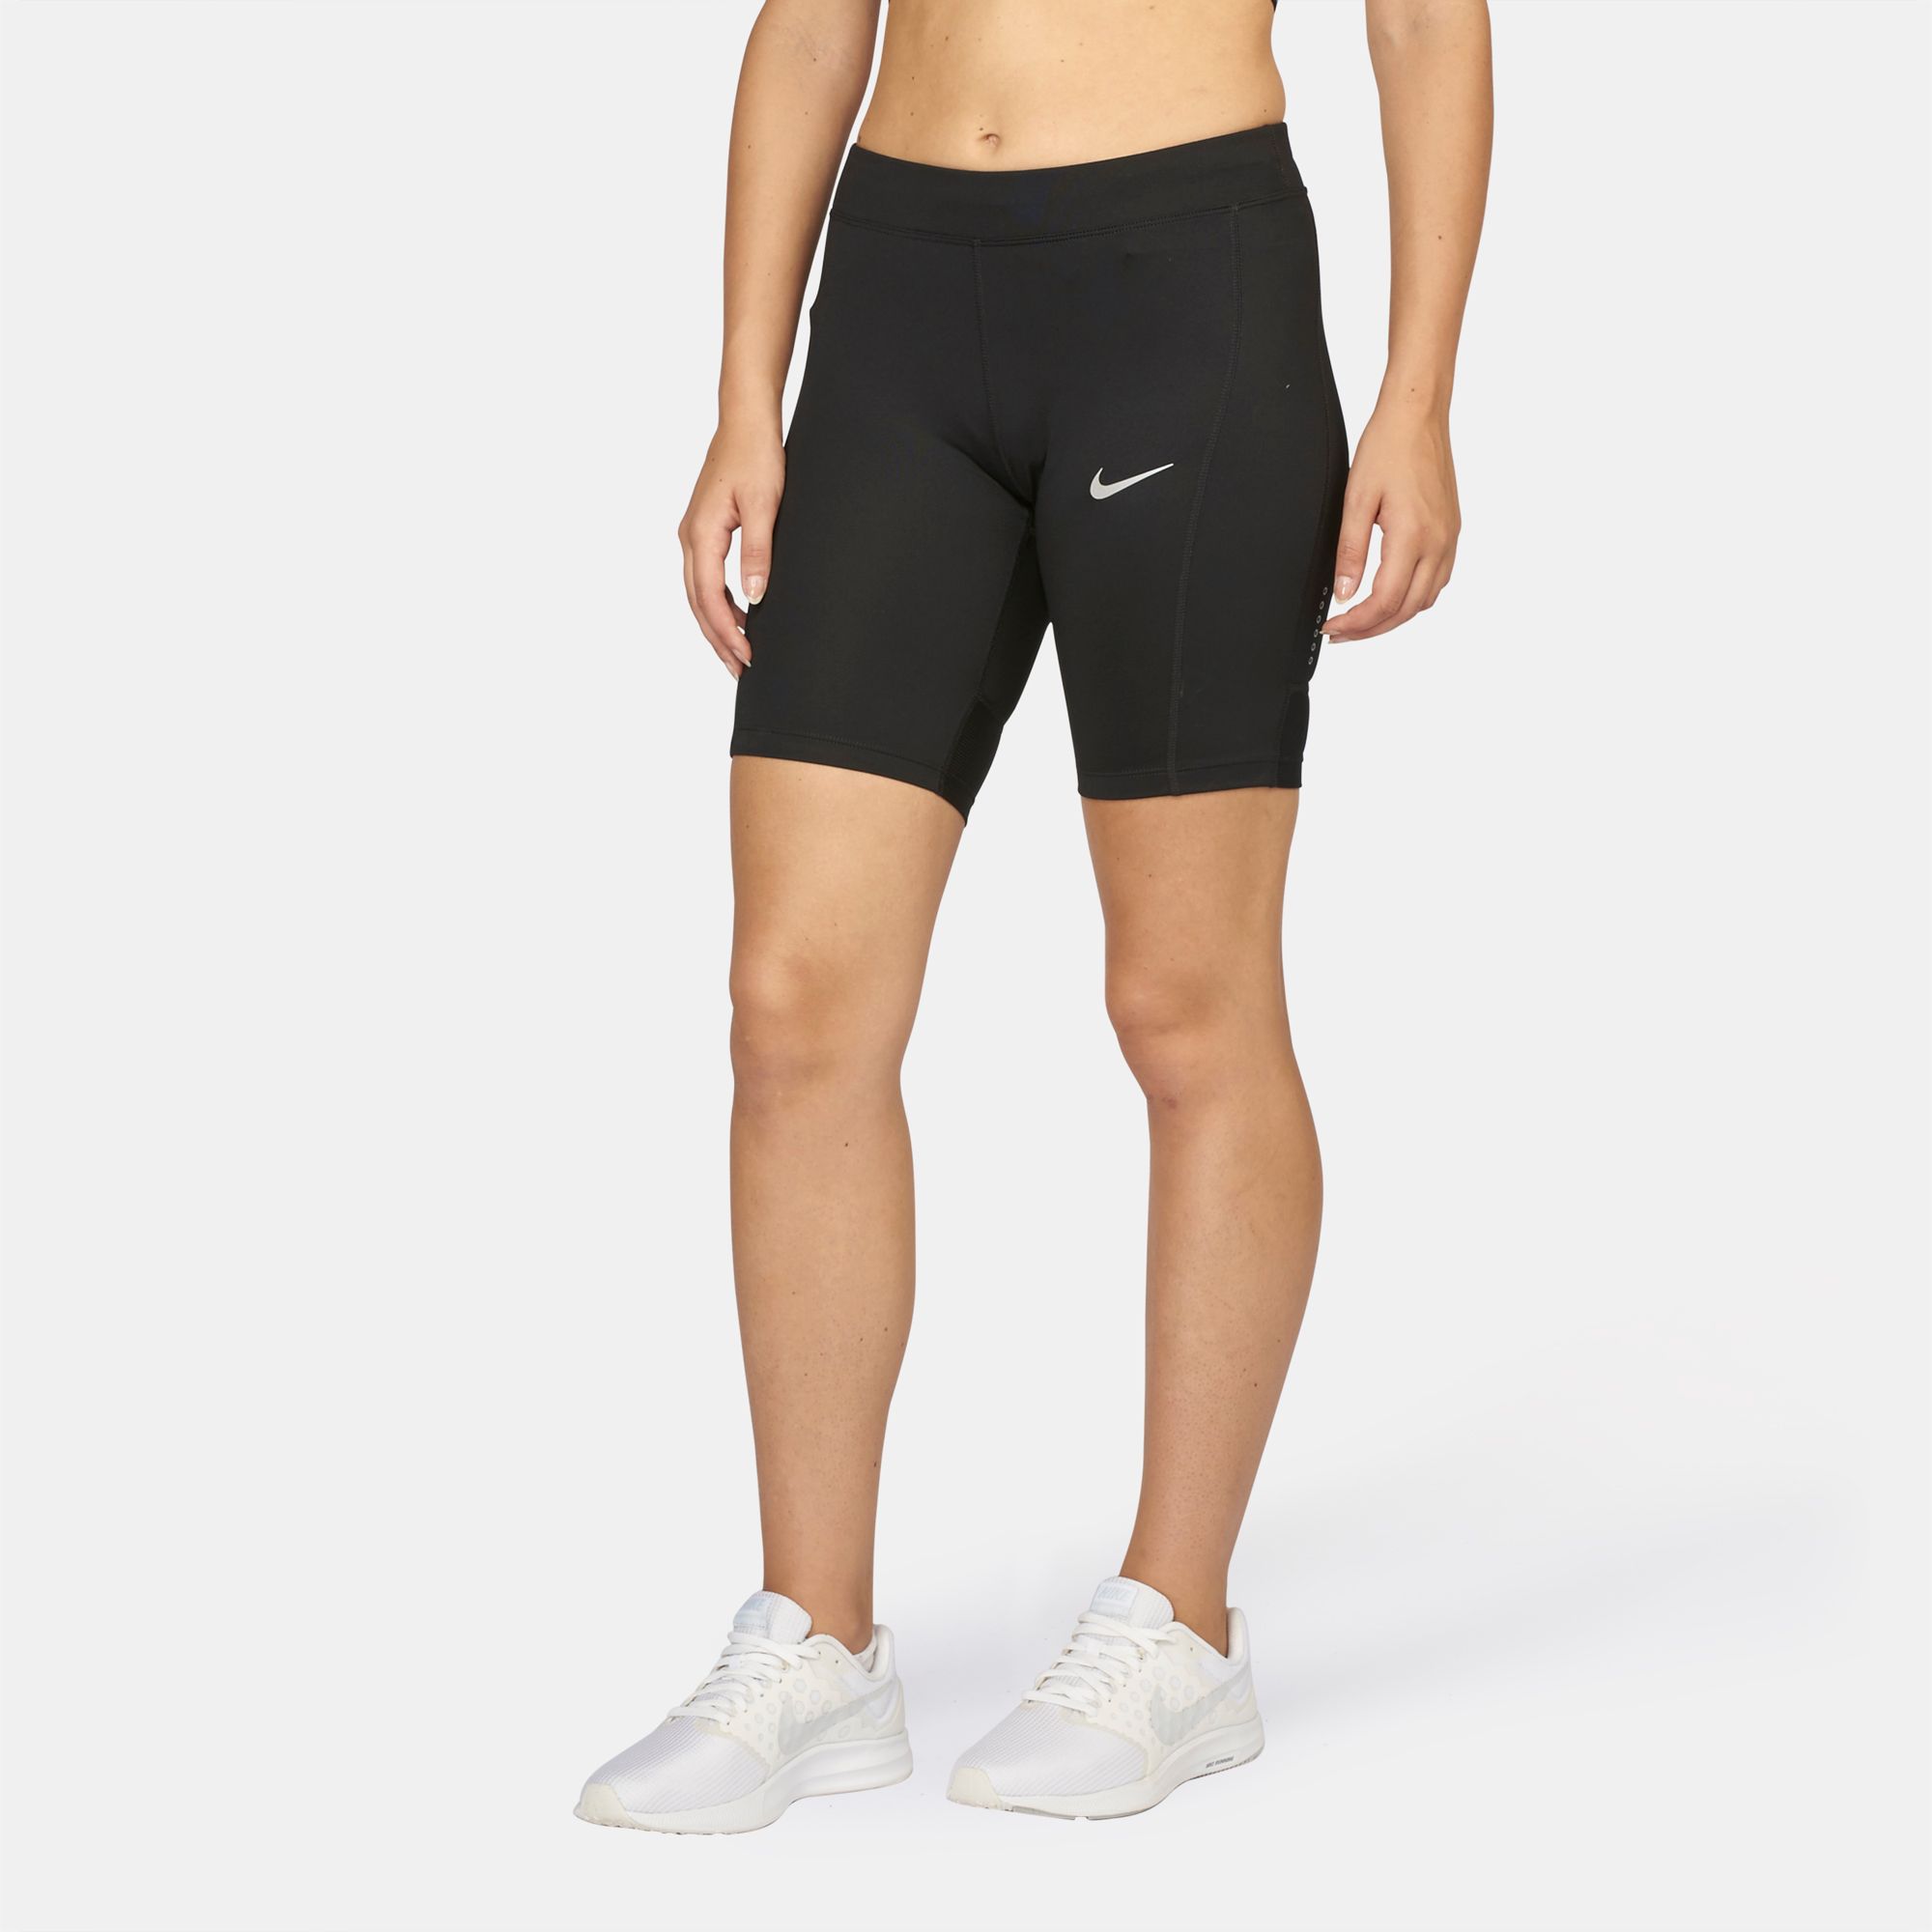 nike essential 8 inch running shorts ladies